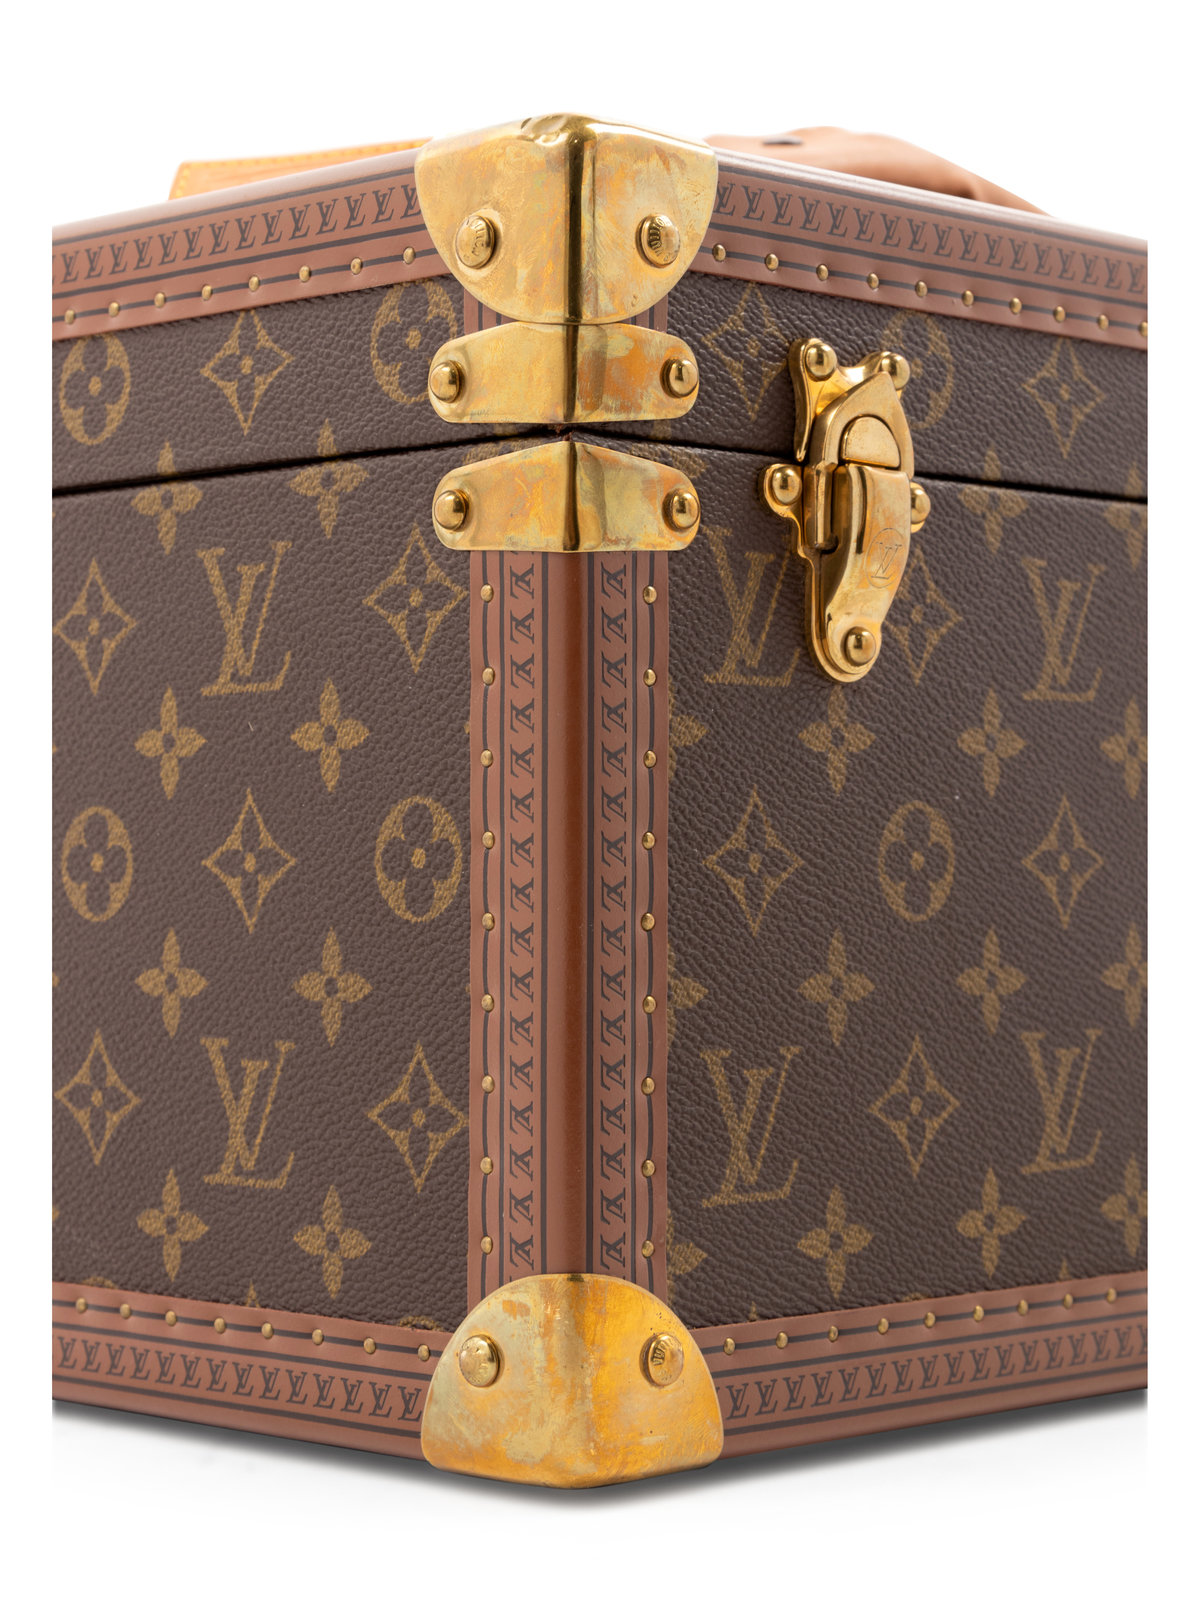 Sold at Auction: Louis Vuitton, Louis Vuitton Monogram Babylone Handbag